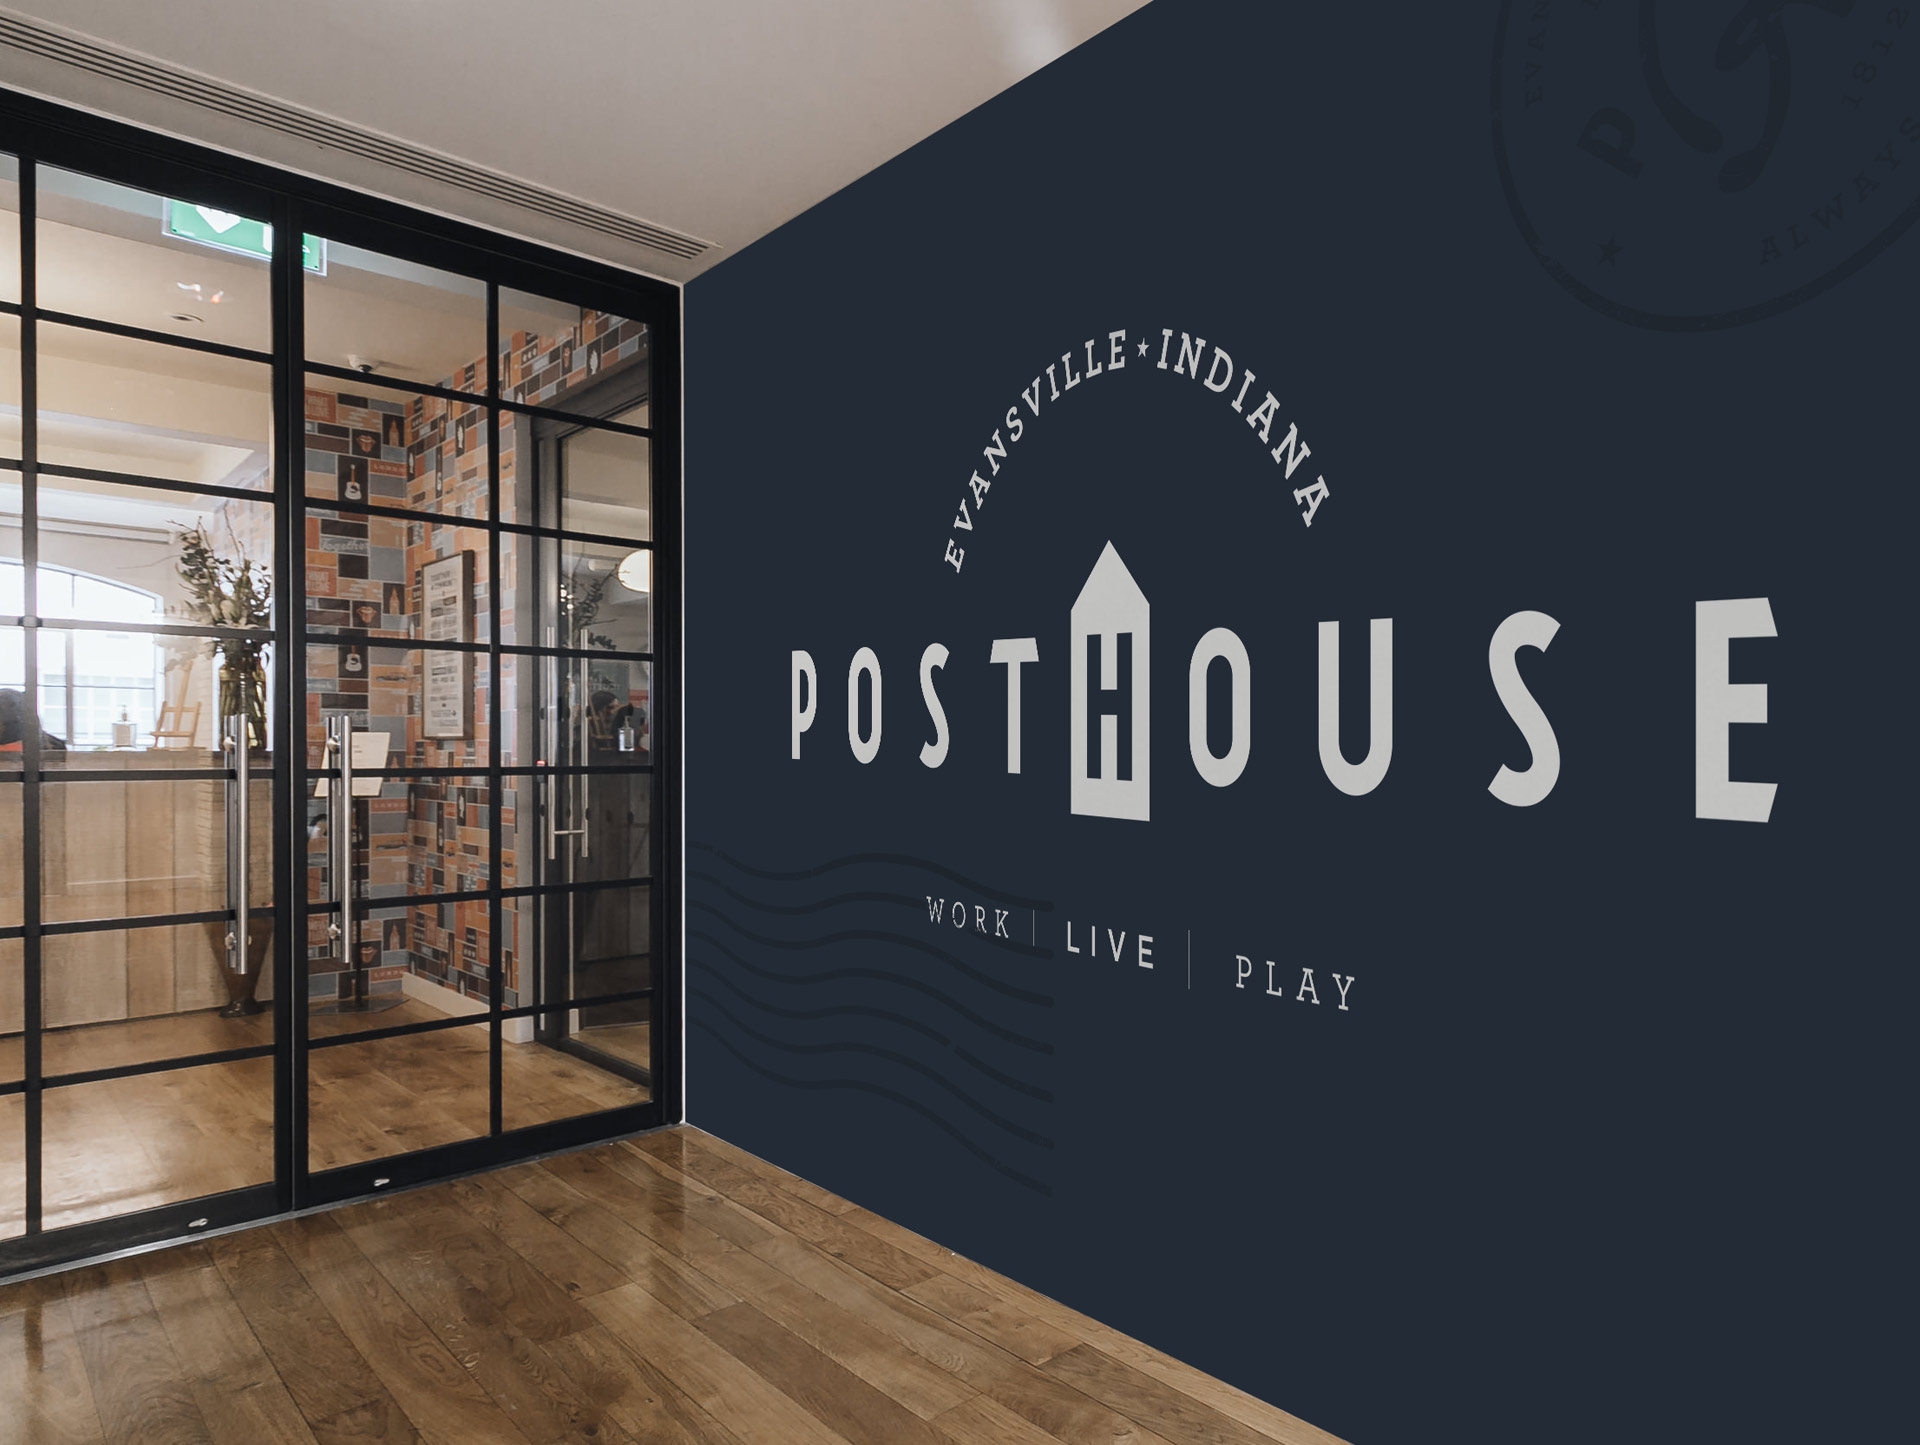 Posthouse